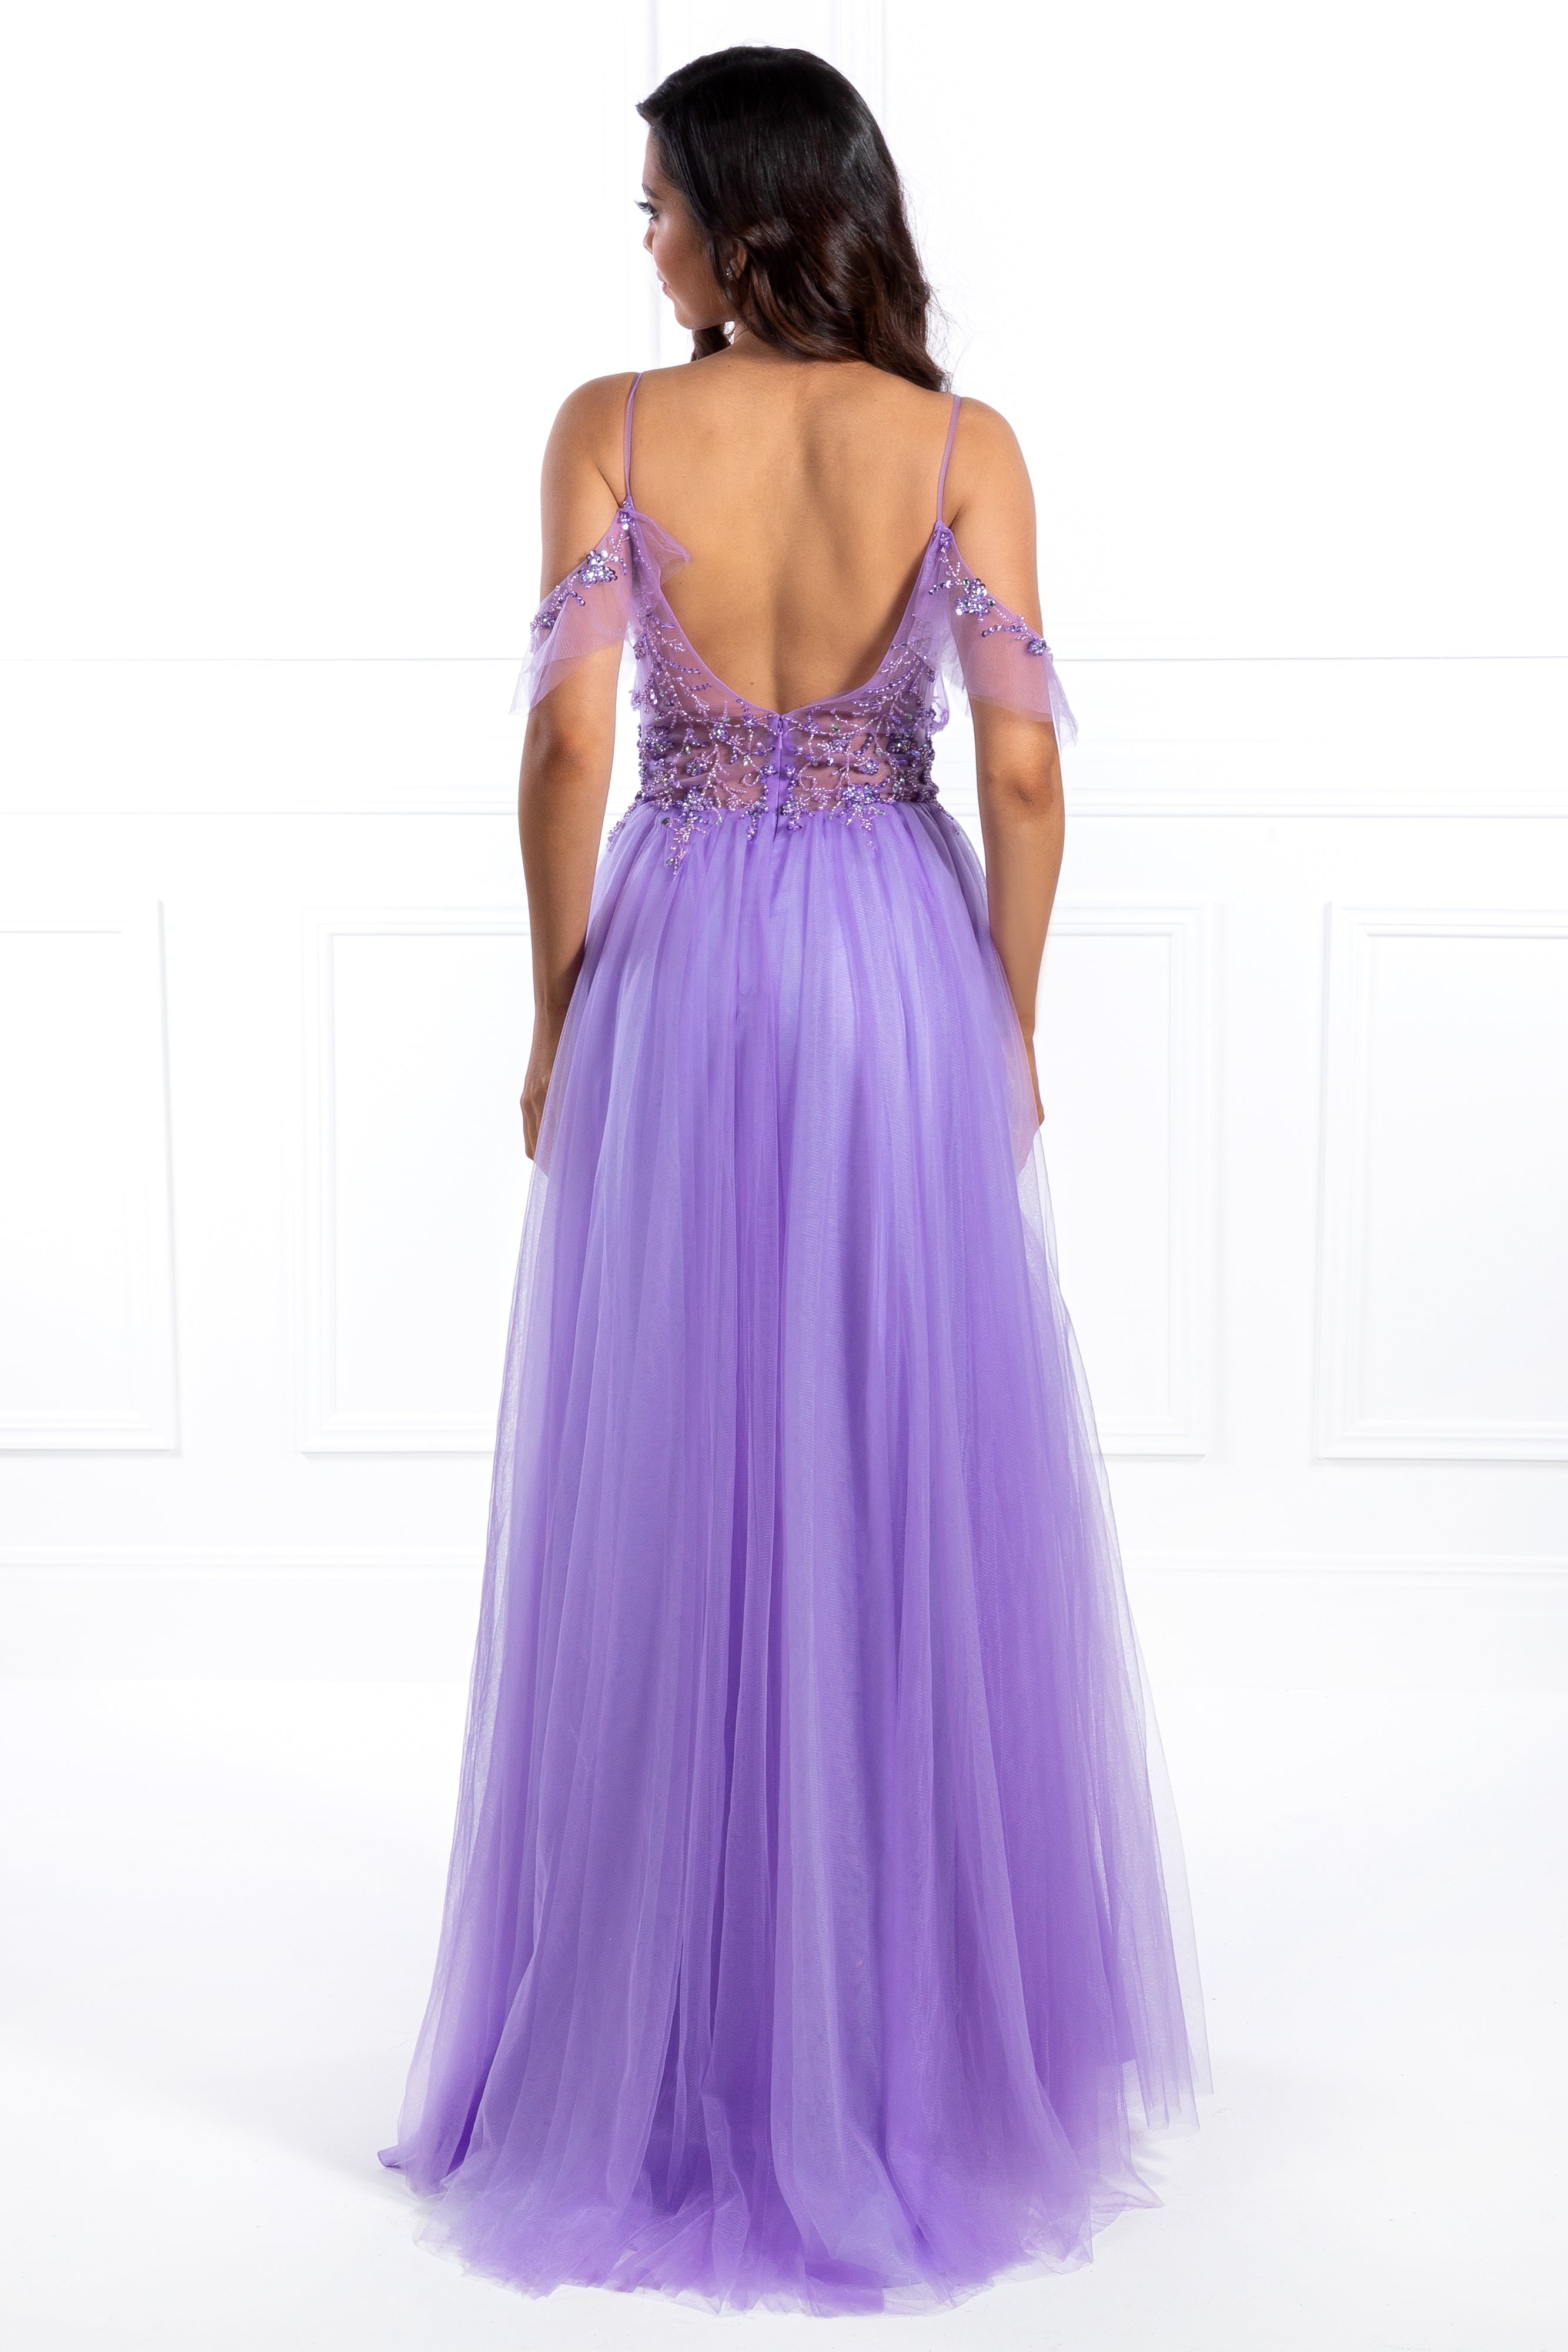 Honey Couture LOLA Purple Crystal Tulle Skirt Formal Dress